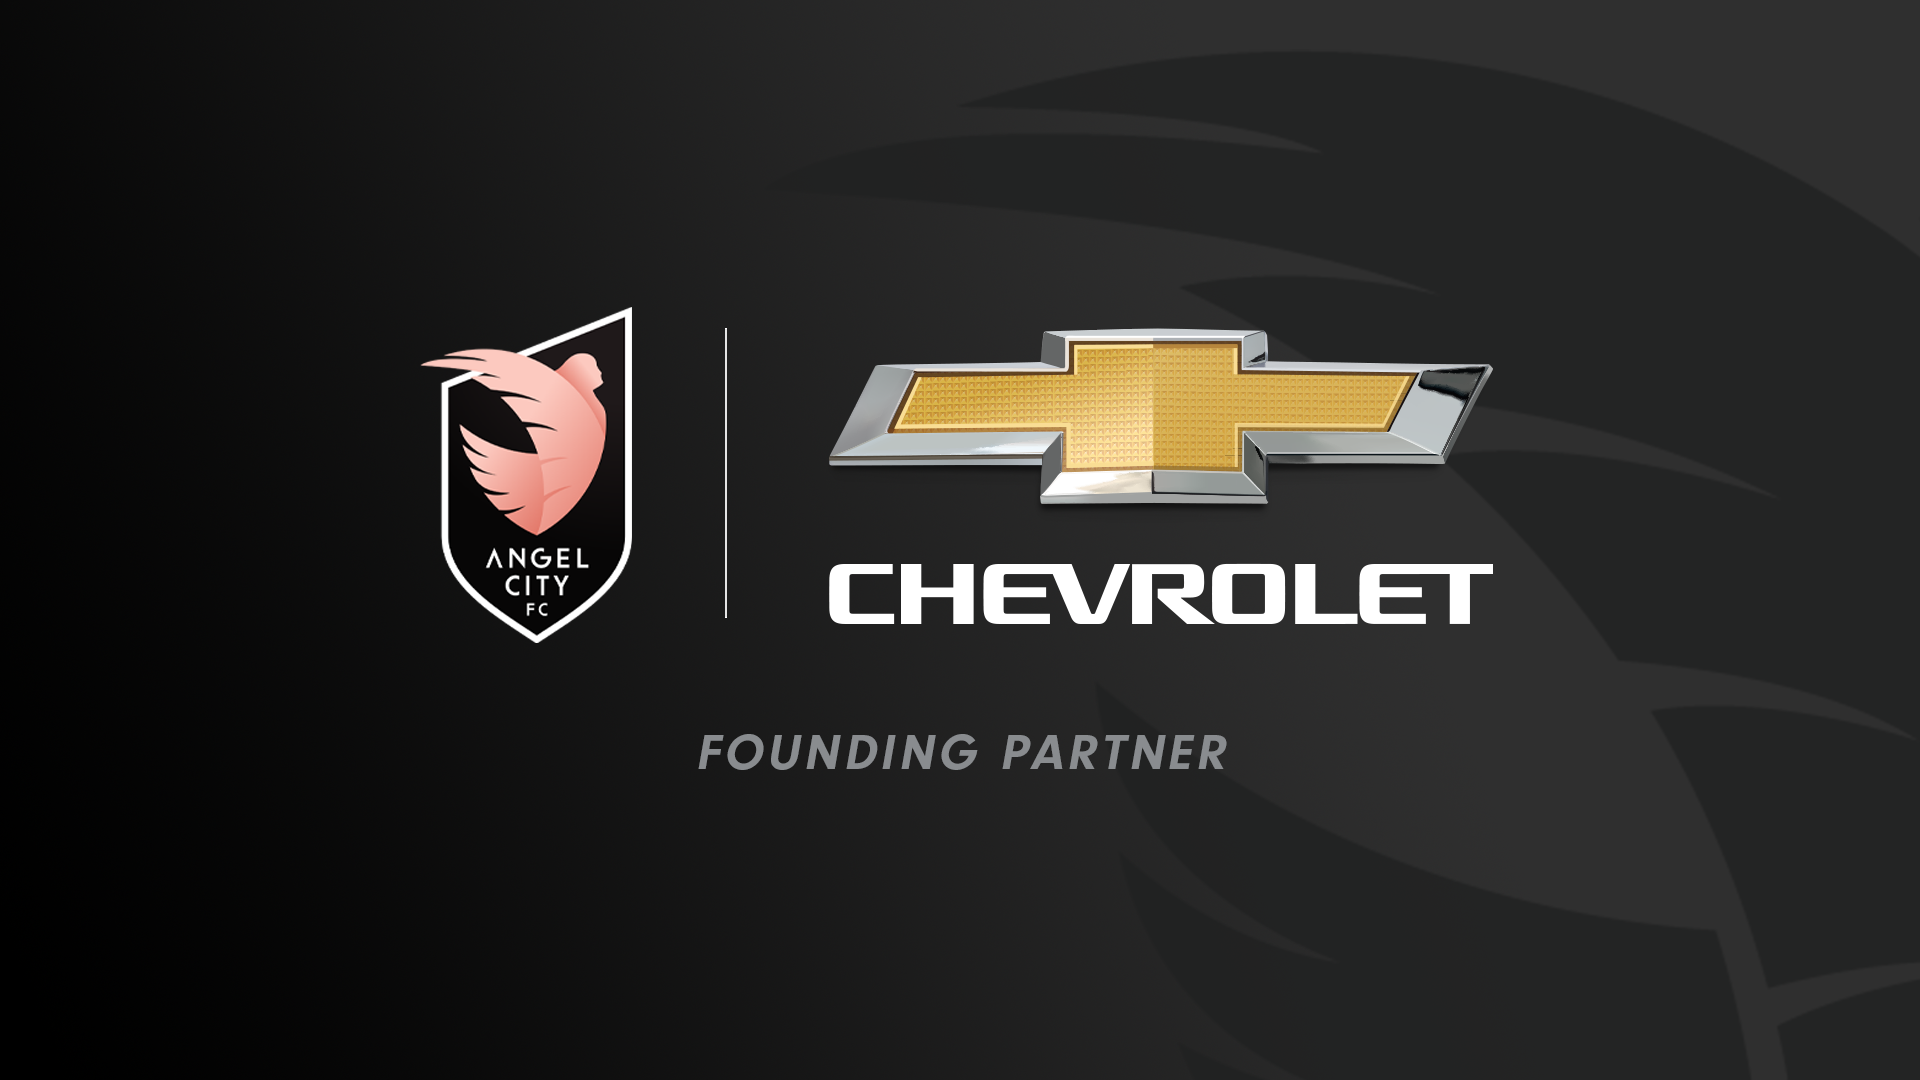 Chevrolet Joins Angel City as Founding Partner